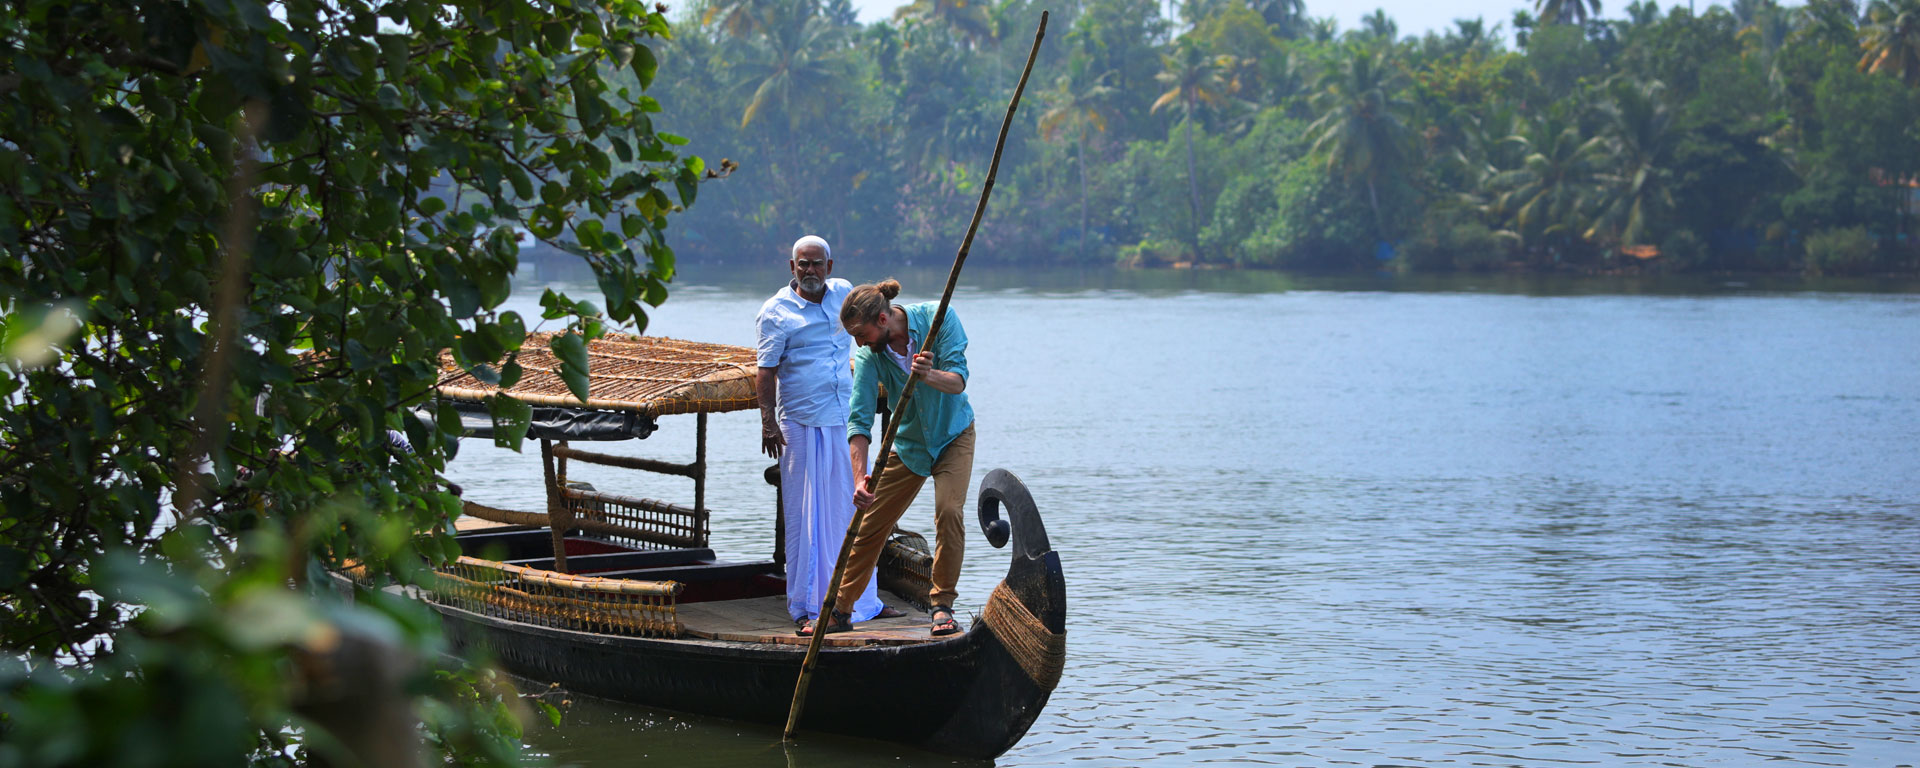 Kerala Responsible Tourism Mission Society